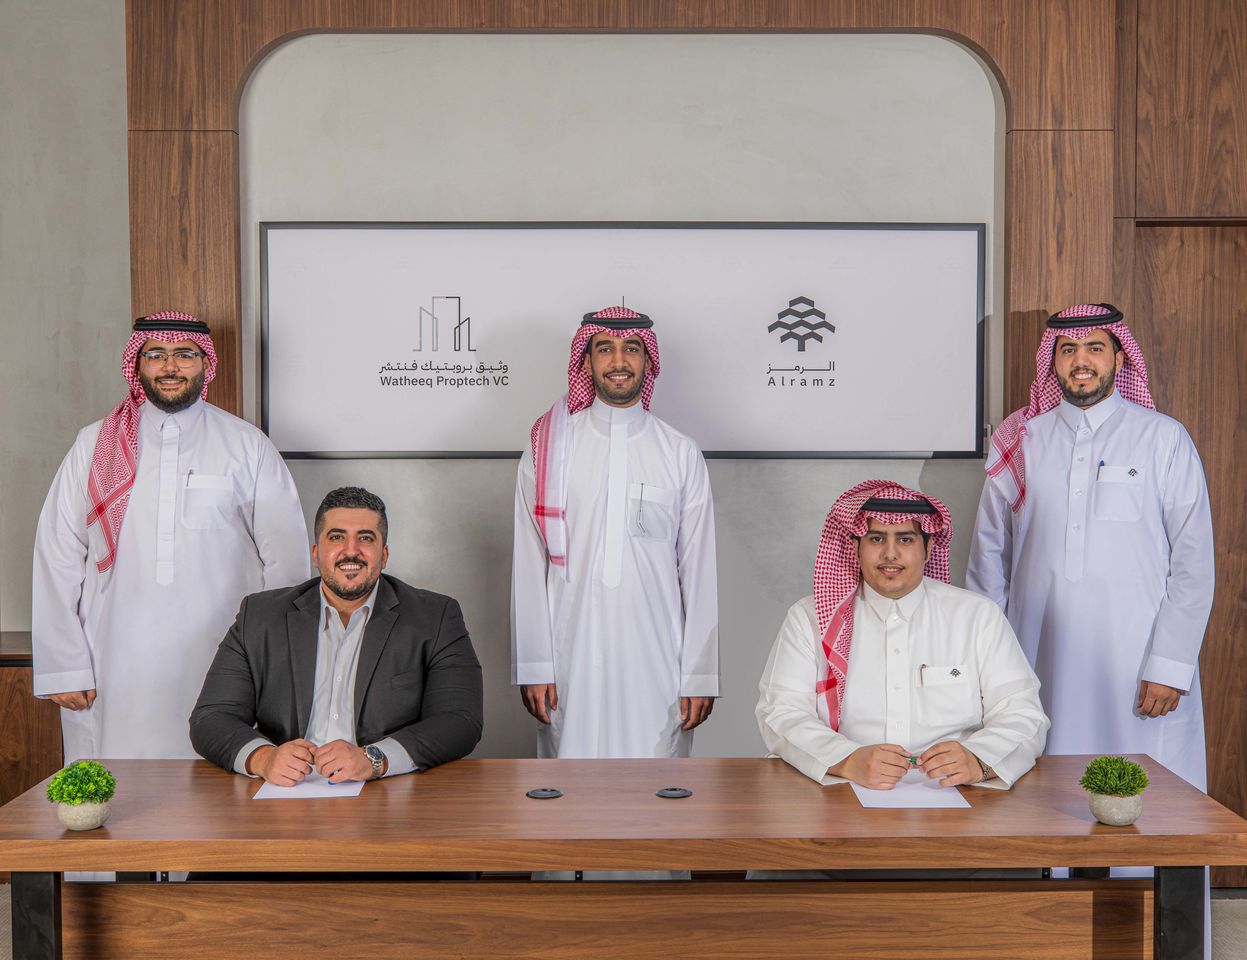 Al Ramz partners with top Saudi proptech company